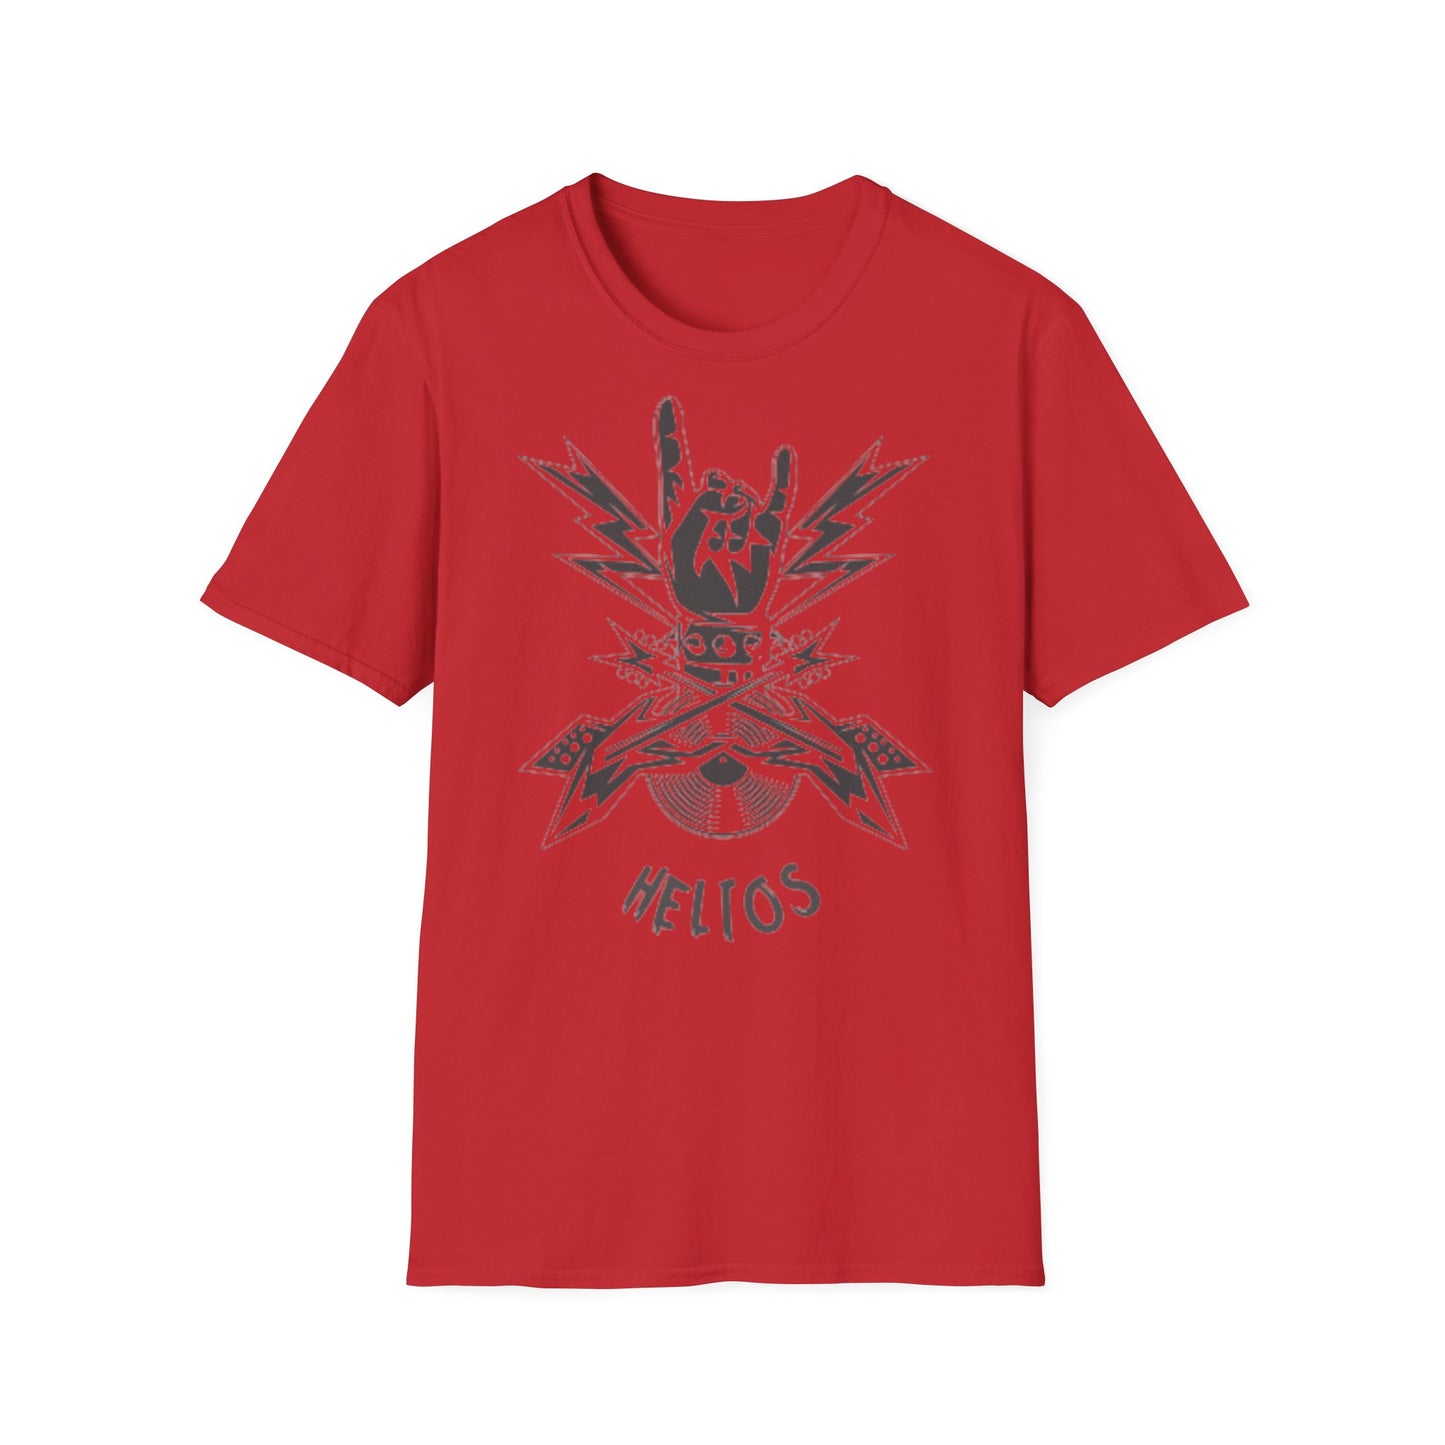 Helios T-Shirt (#10)